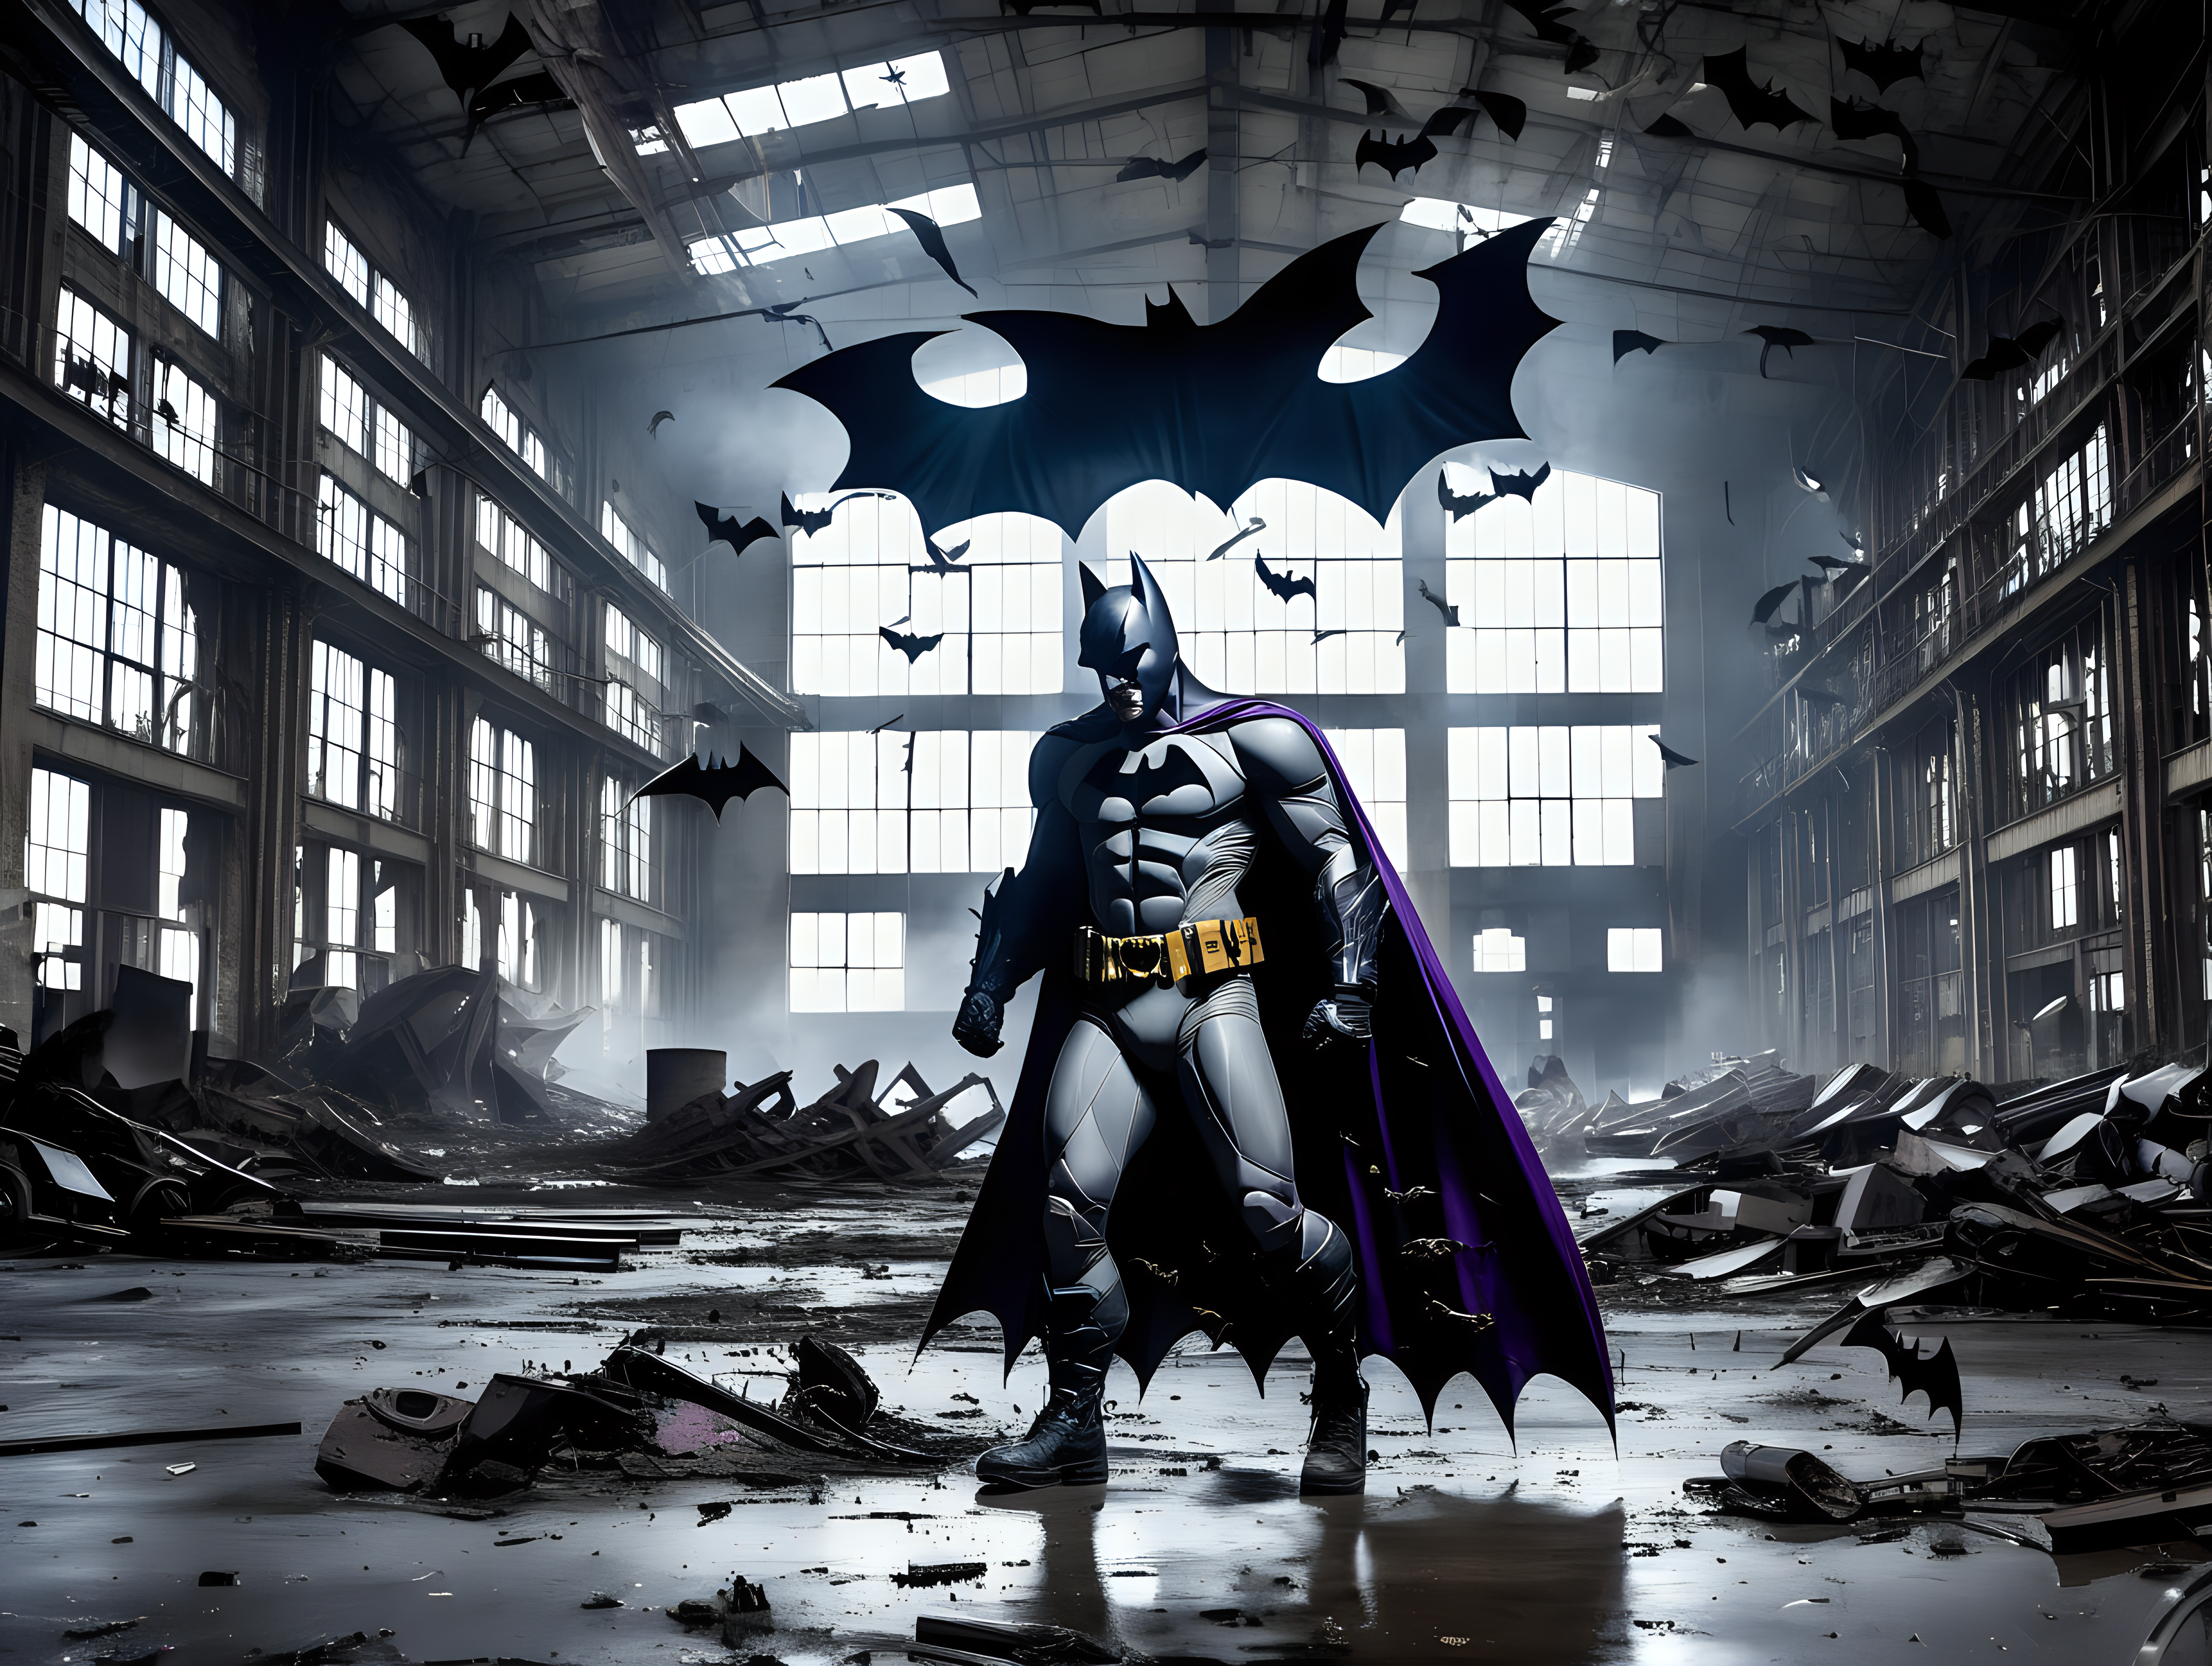 Batman fights the joker in an abandon factory with bats flying overhead